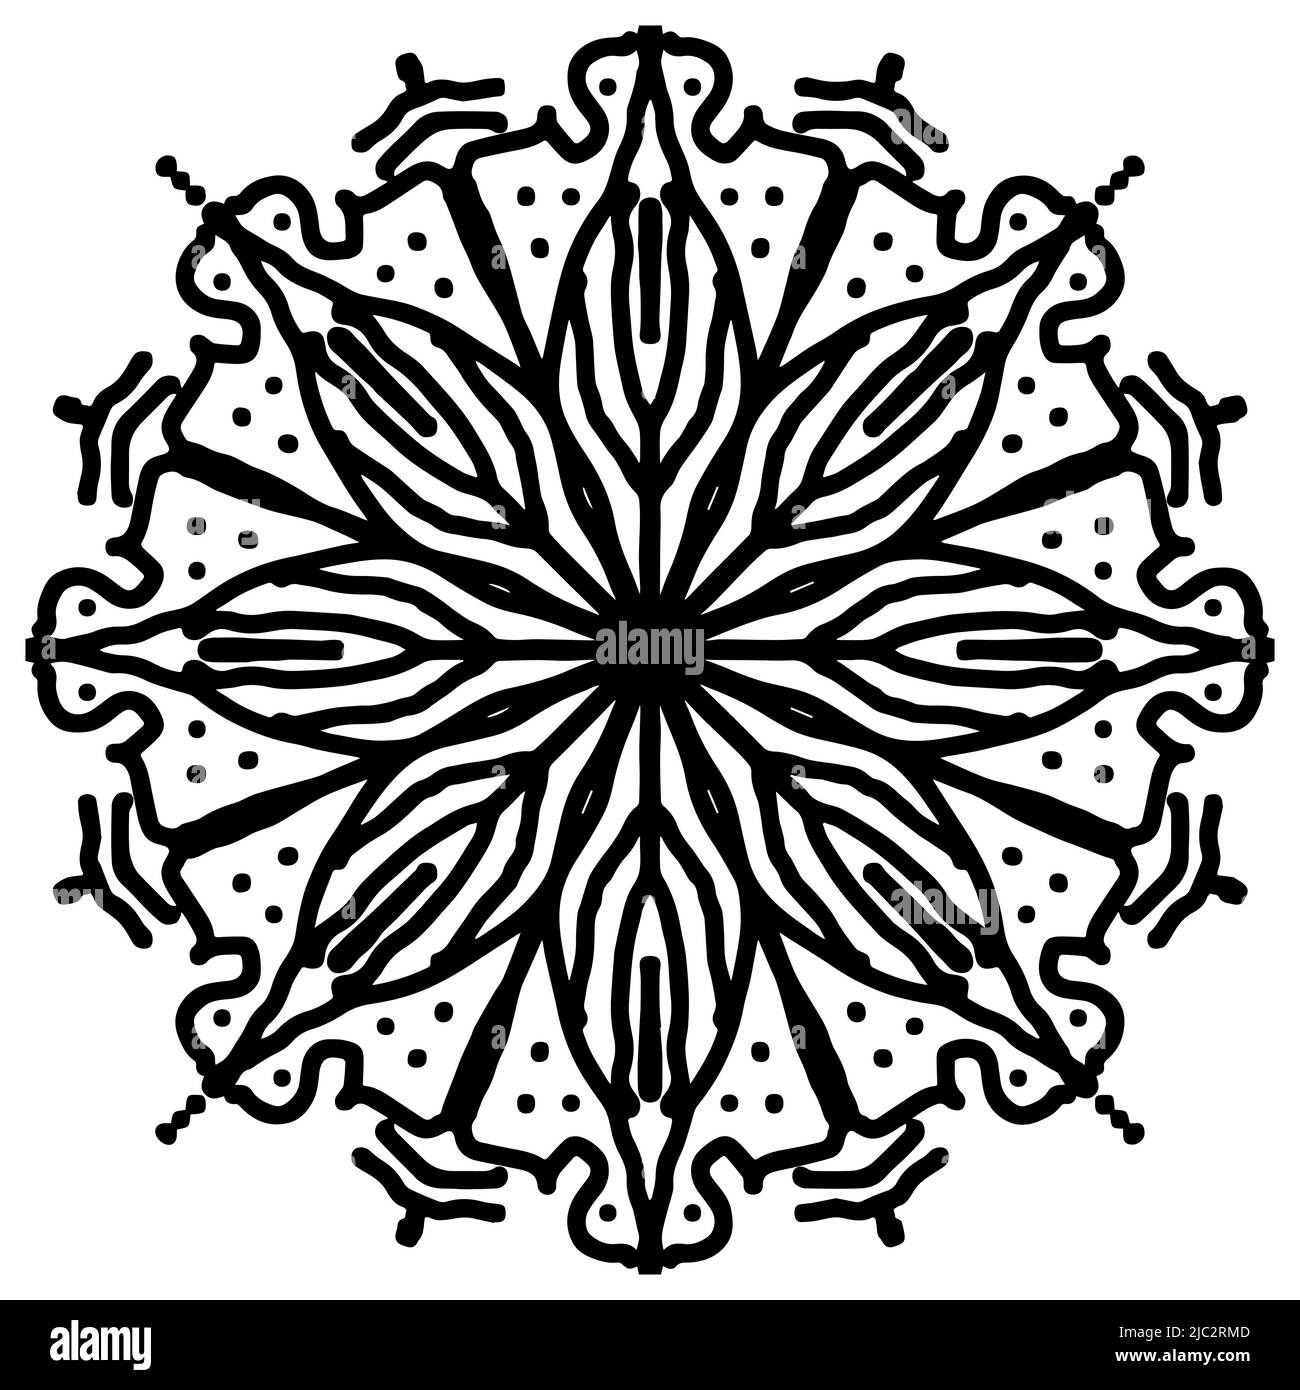 Mandala ornament.  Hand drawn circular pattern in black color izolated on white background. Islam, Arabic, Indian, ottoman motifs. Vector illustration Stock Vector